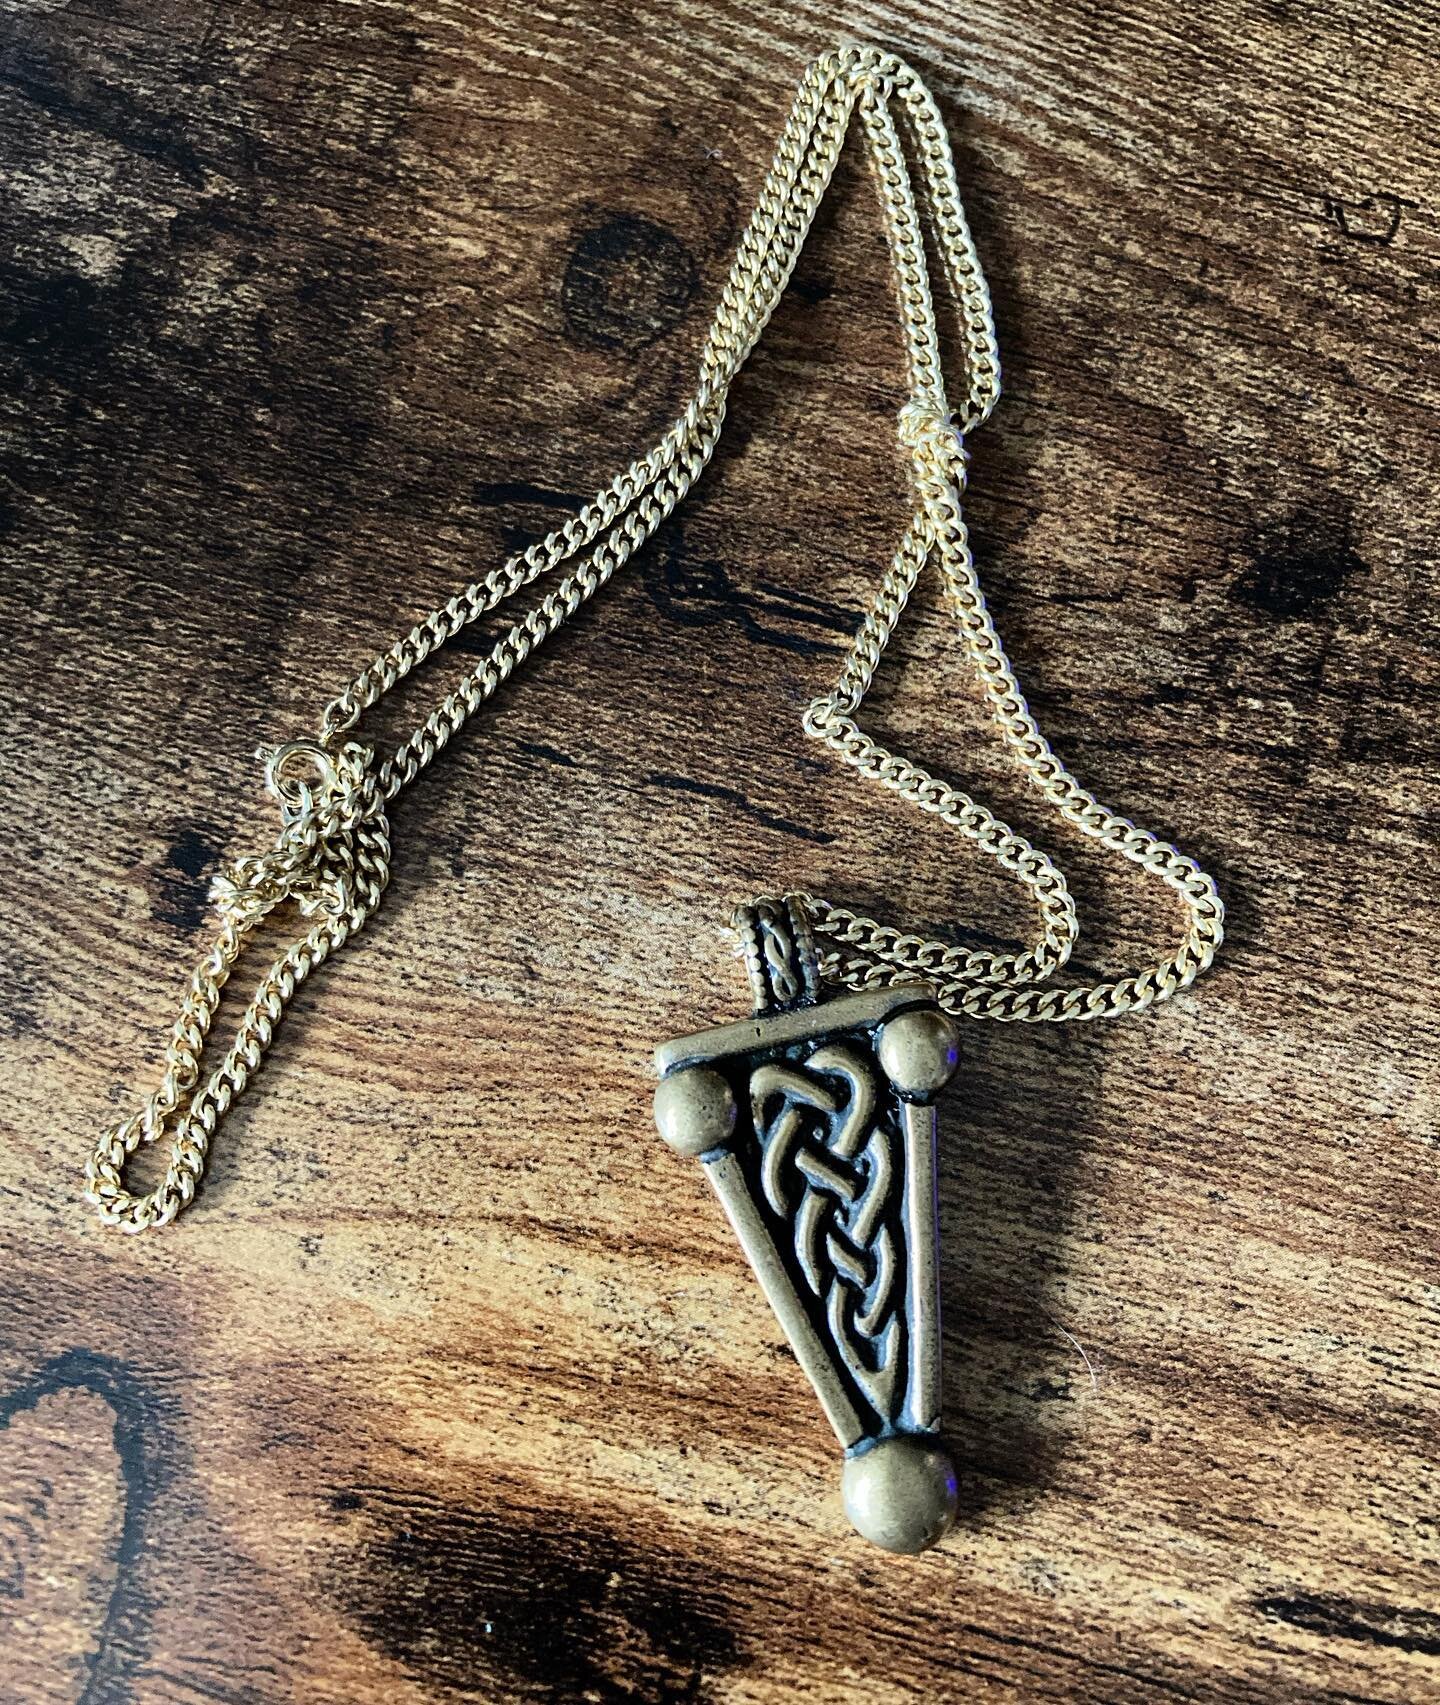 Hacksilver Verakin (Viking) pendant from Crafty Celts. Acquired at DragonCon 2022. 

More #dragoncon2022 updates to come

#dnd #dndpodcast #podcast #critters #taz #naddpod #criticalrole #dndart #dndcharacter #dndcharacterart #dnd5e #dndmap #dndmemes 